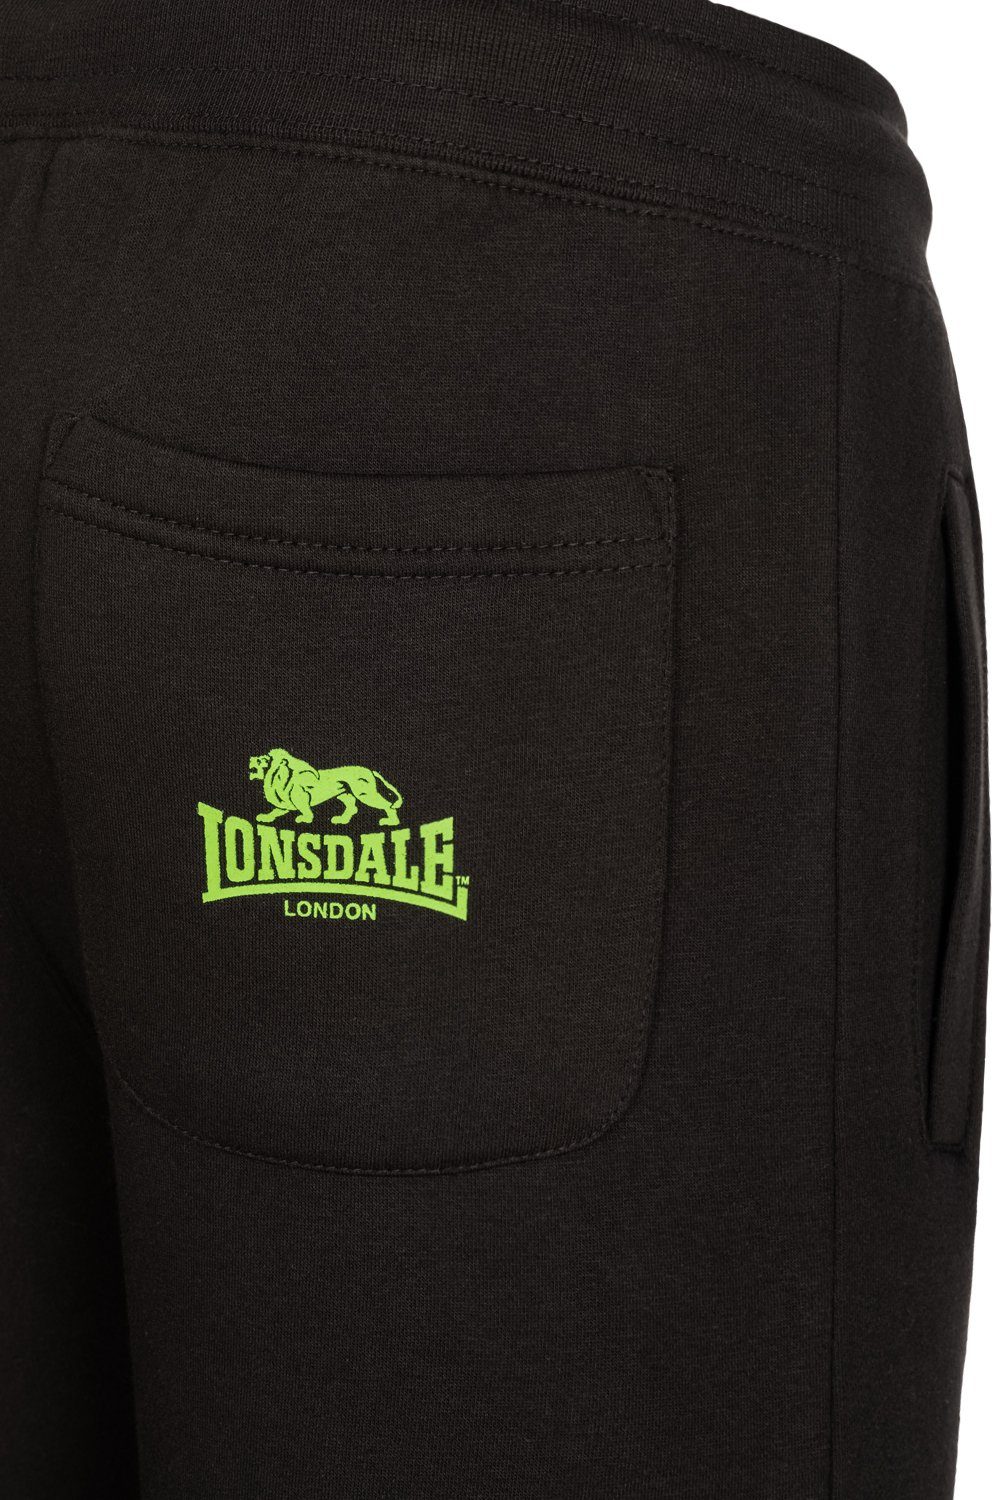 Lonsdale WELLINGHAM Green Black/Neon Jogginghose